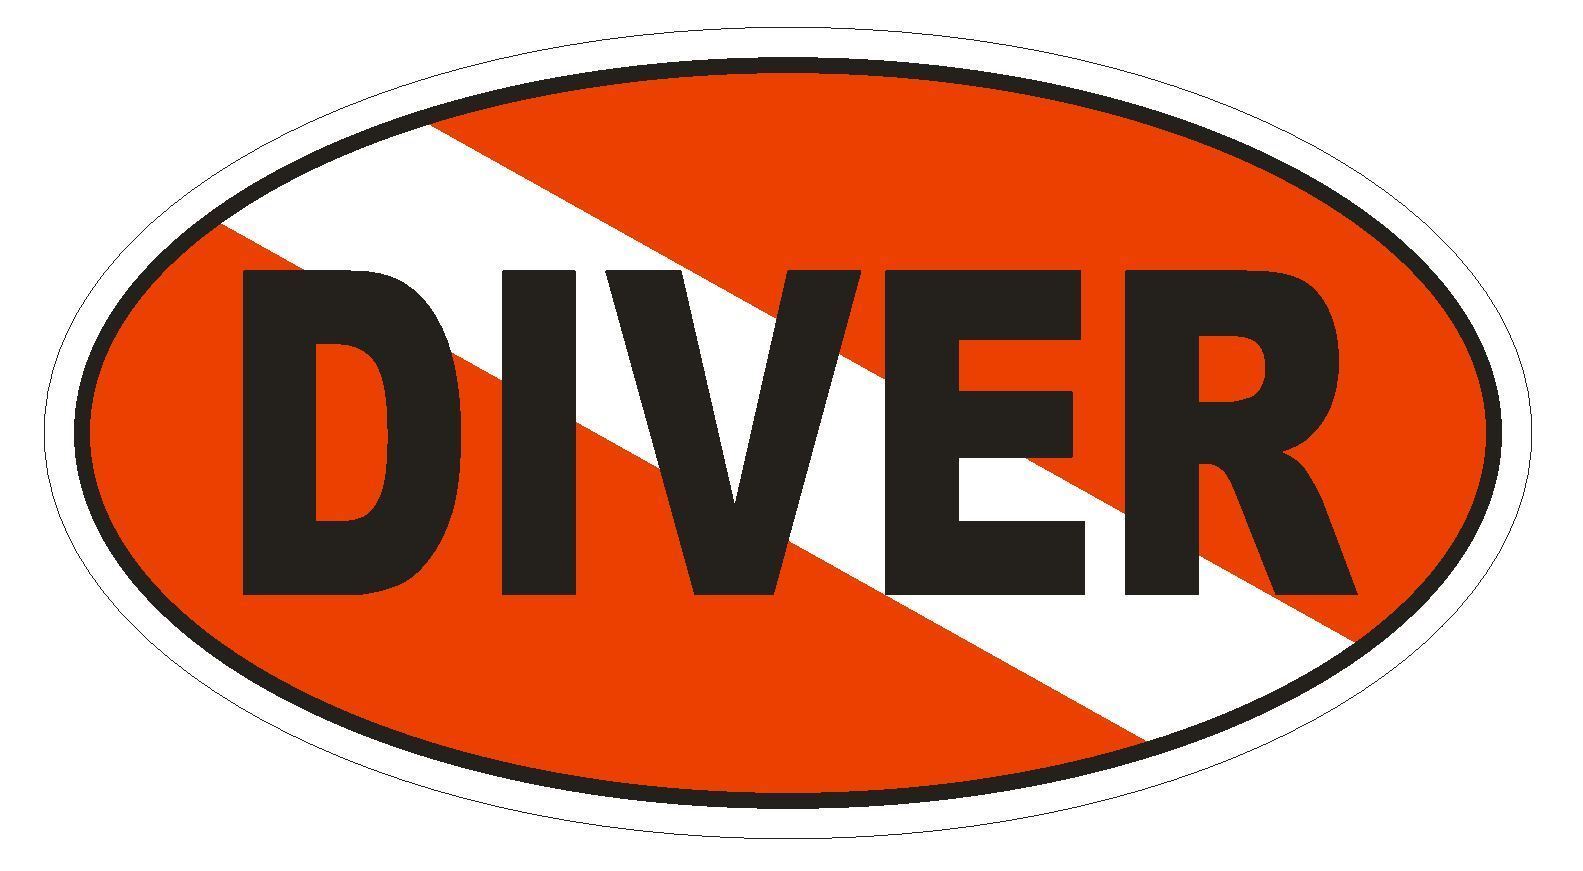 DIVER Oval Bumper Sticker or Helmet Sticker D1835 Euro Oval - $1.39 - $75.00